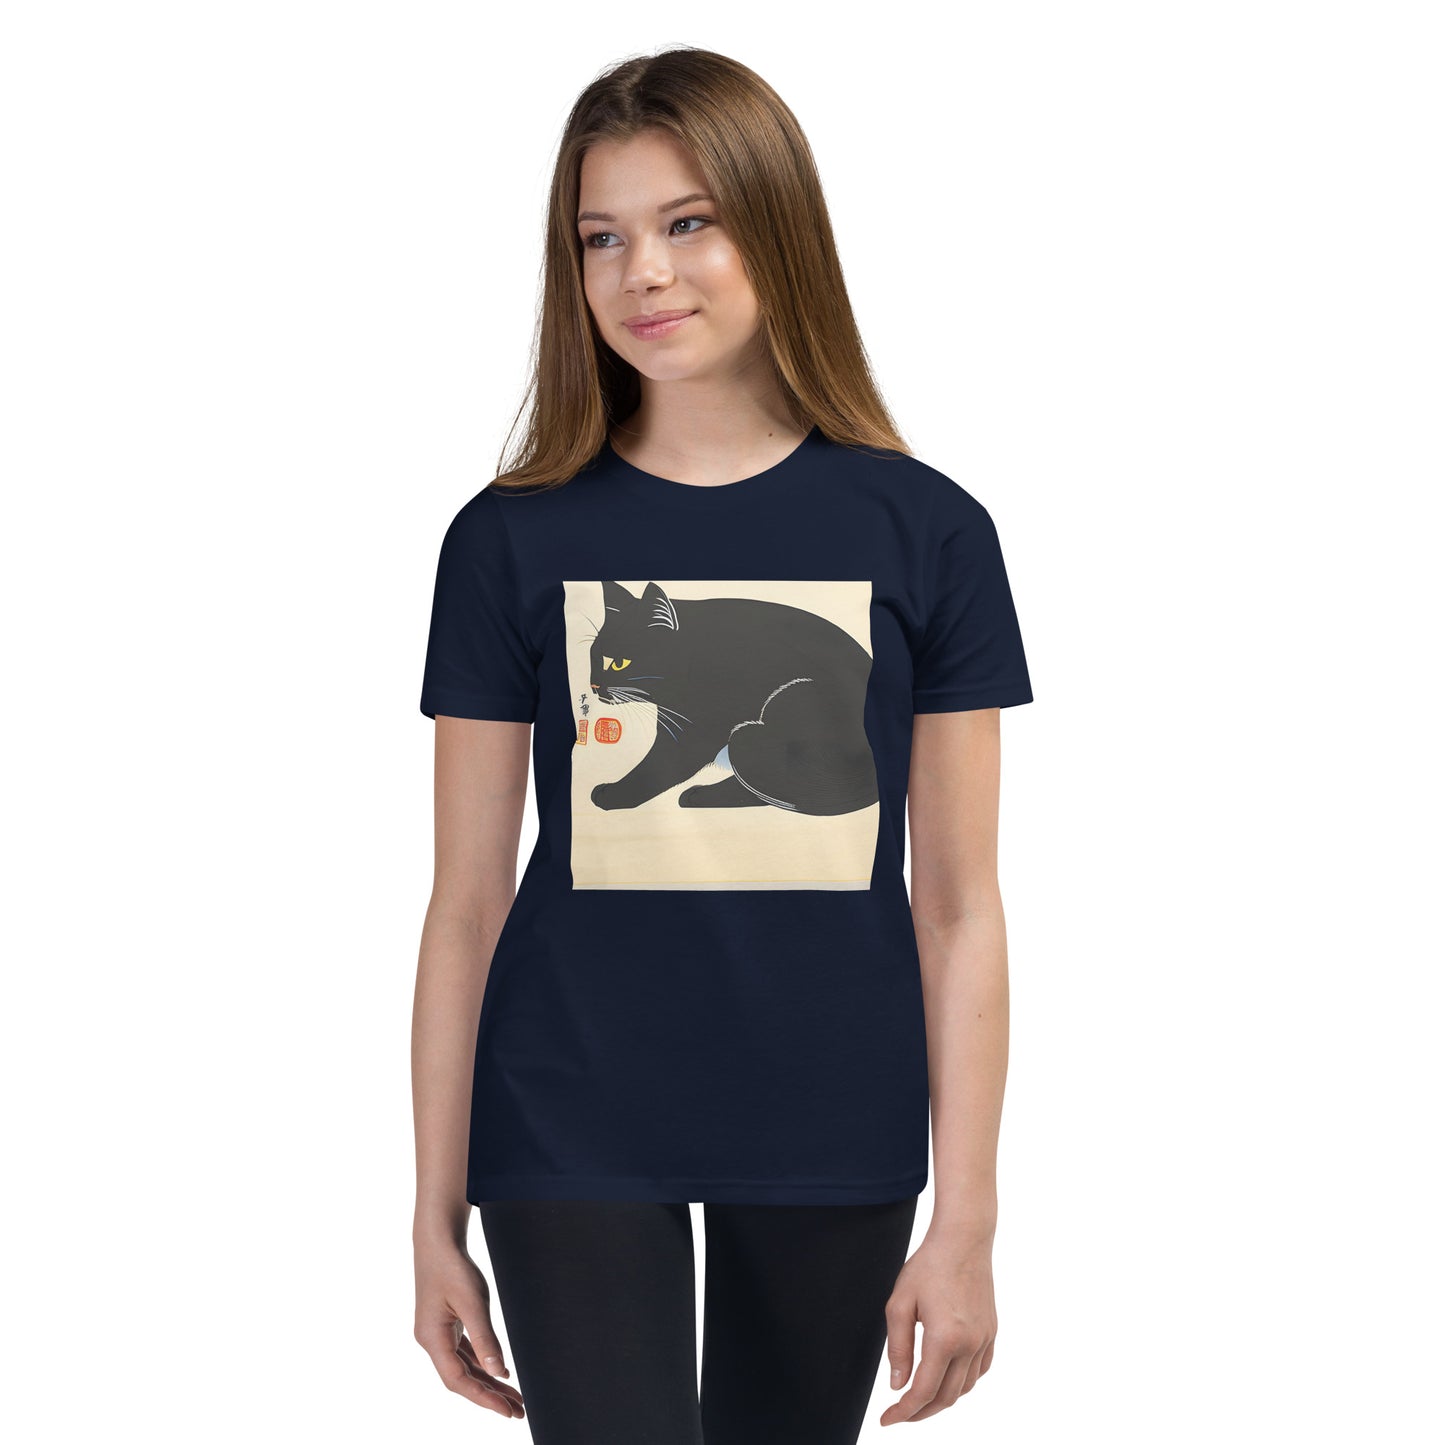 Meowsome Kid's T-Shirt - 019